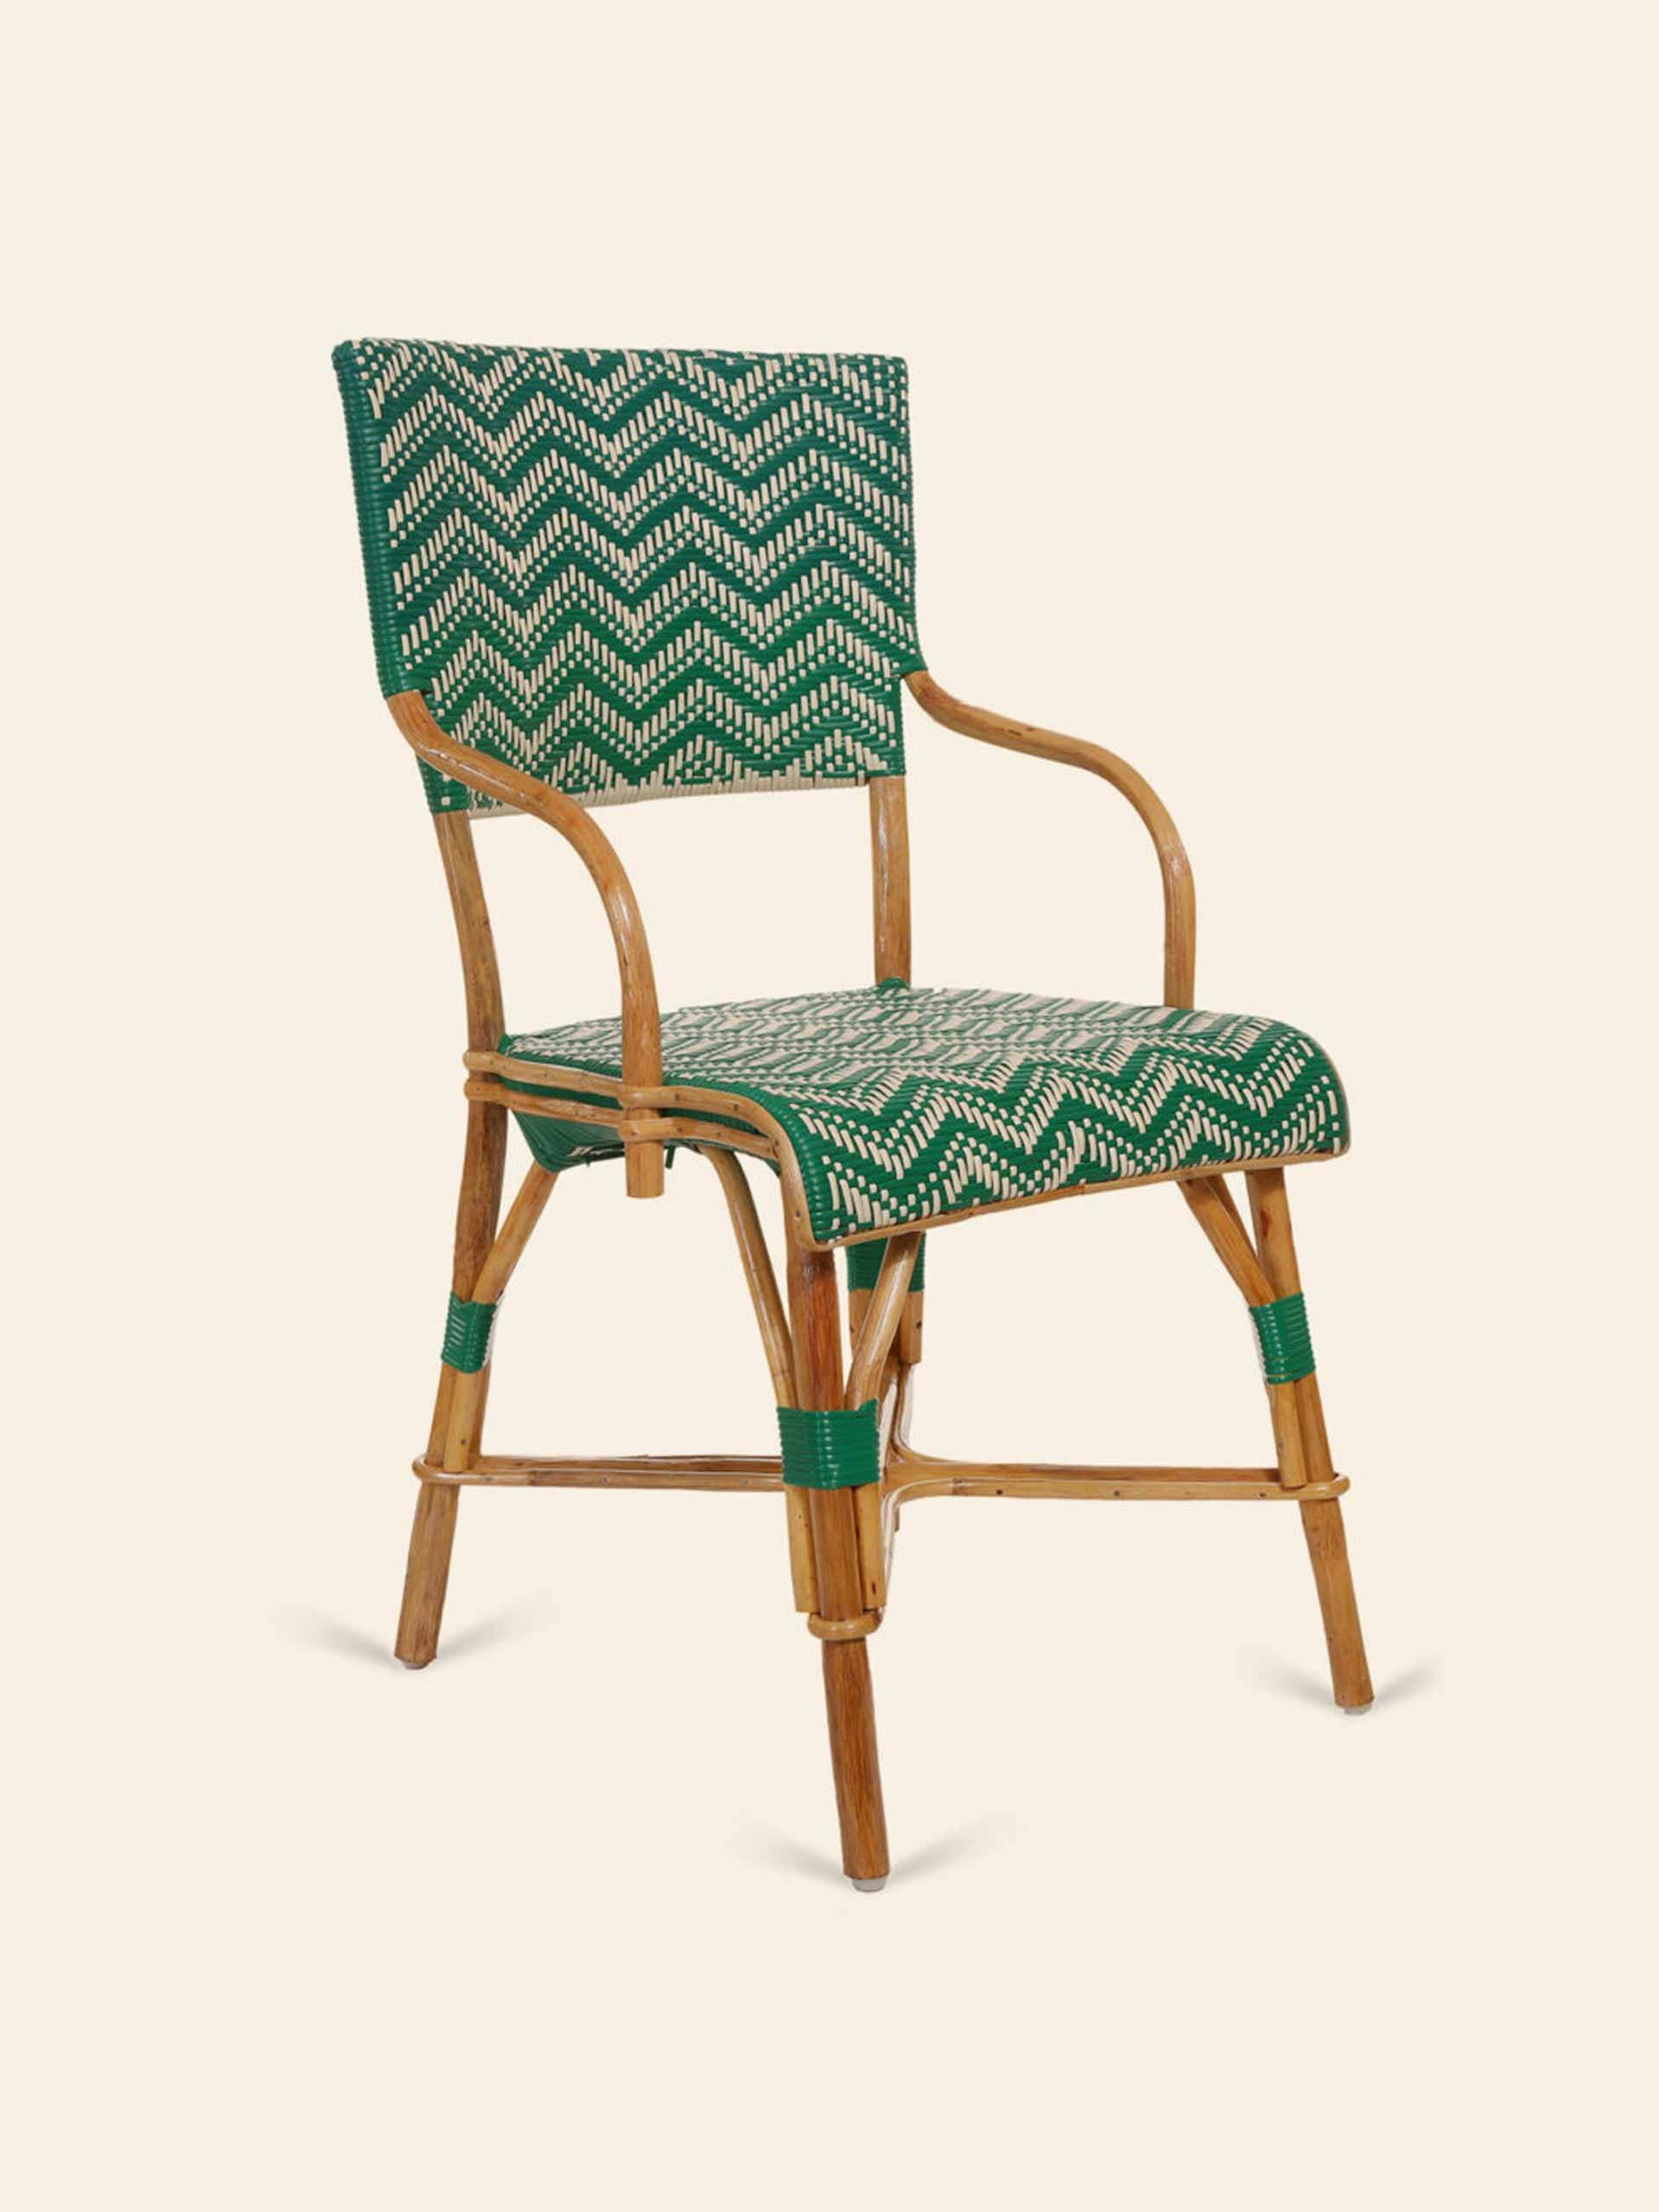 Handwoven chair